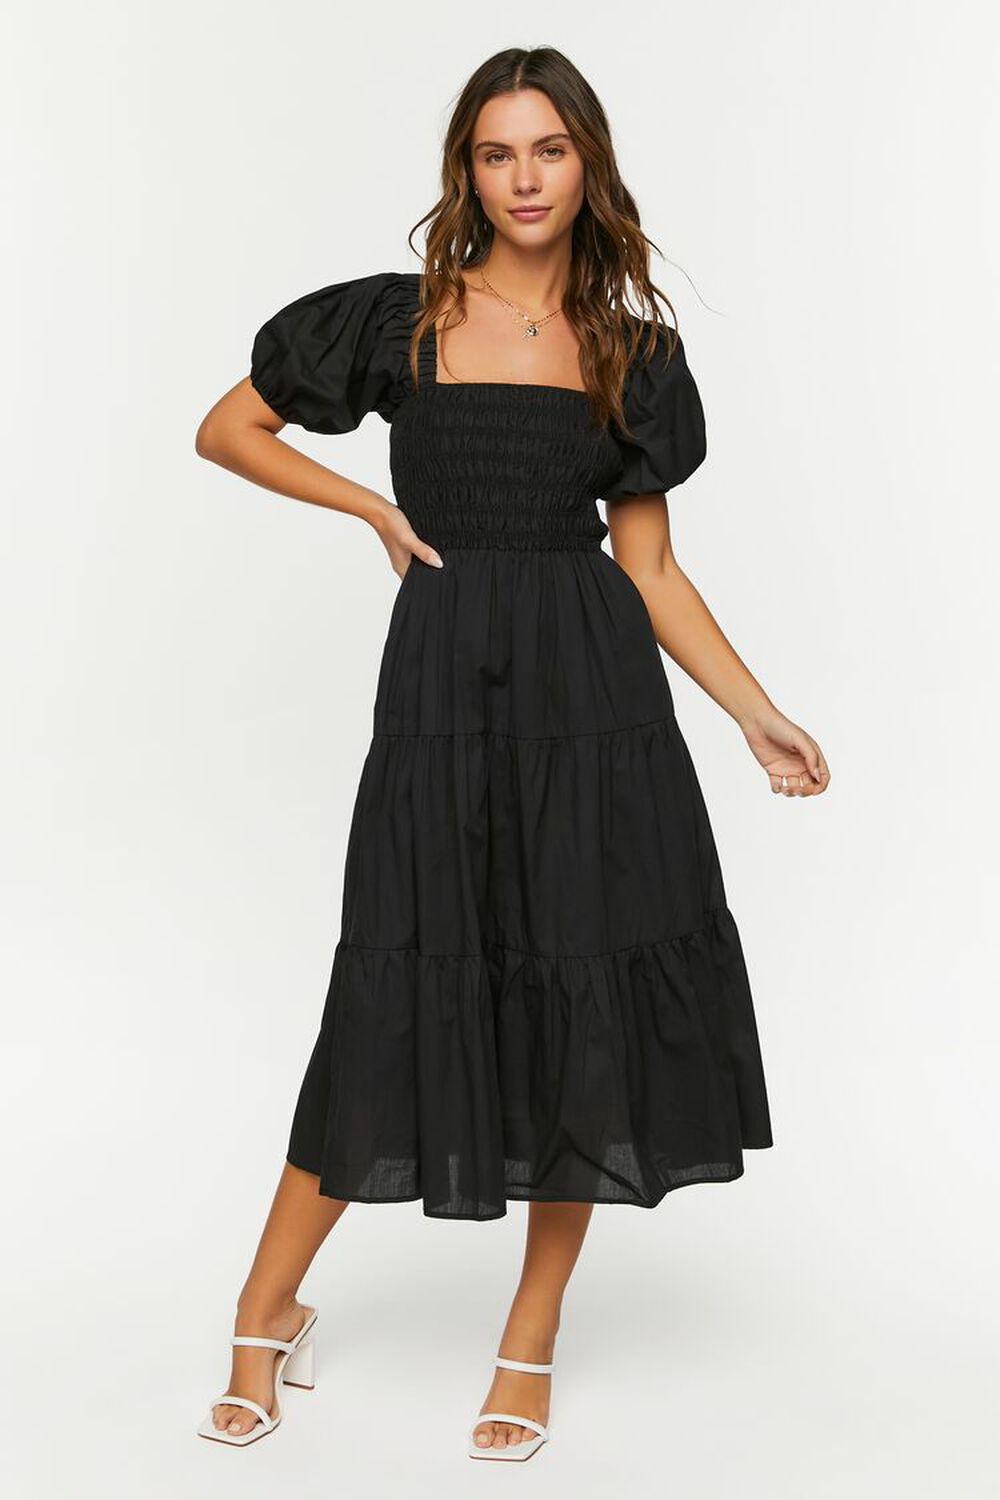 BLACK Smocked Puff-Sleeve Dress, image 1